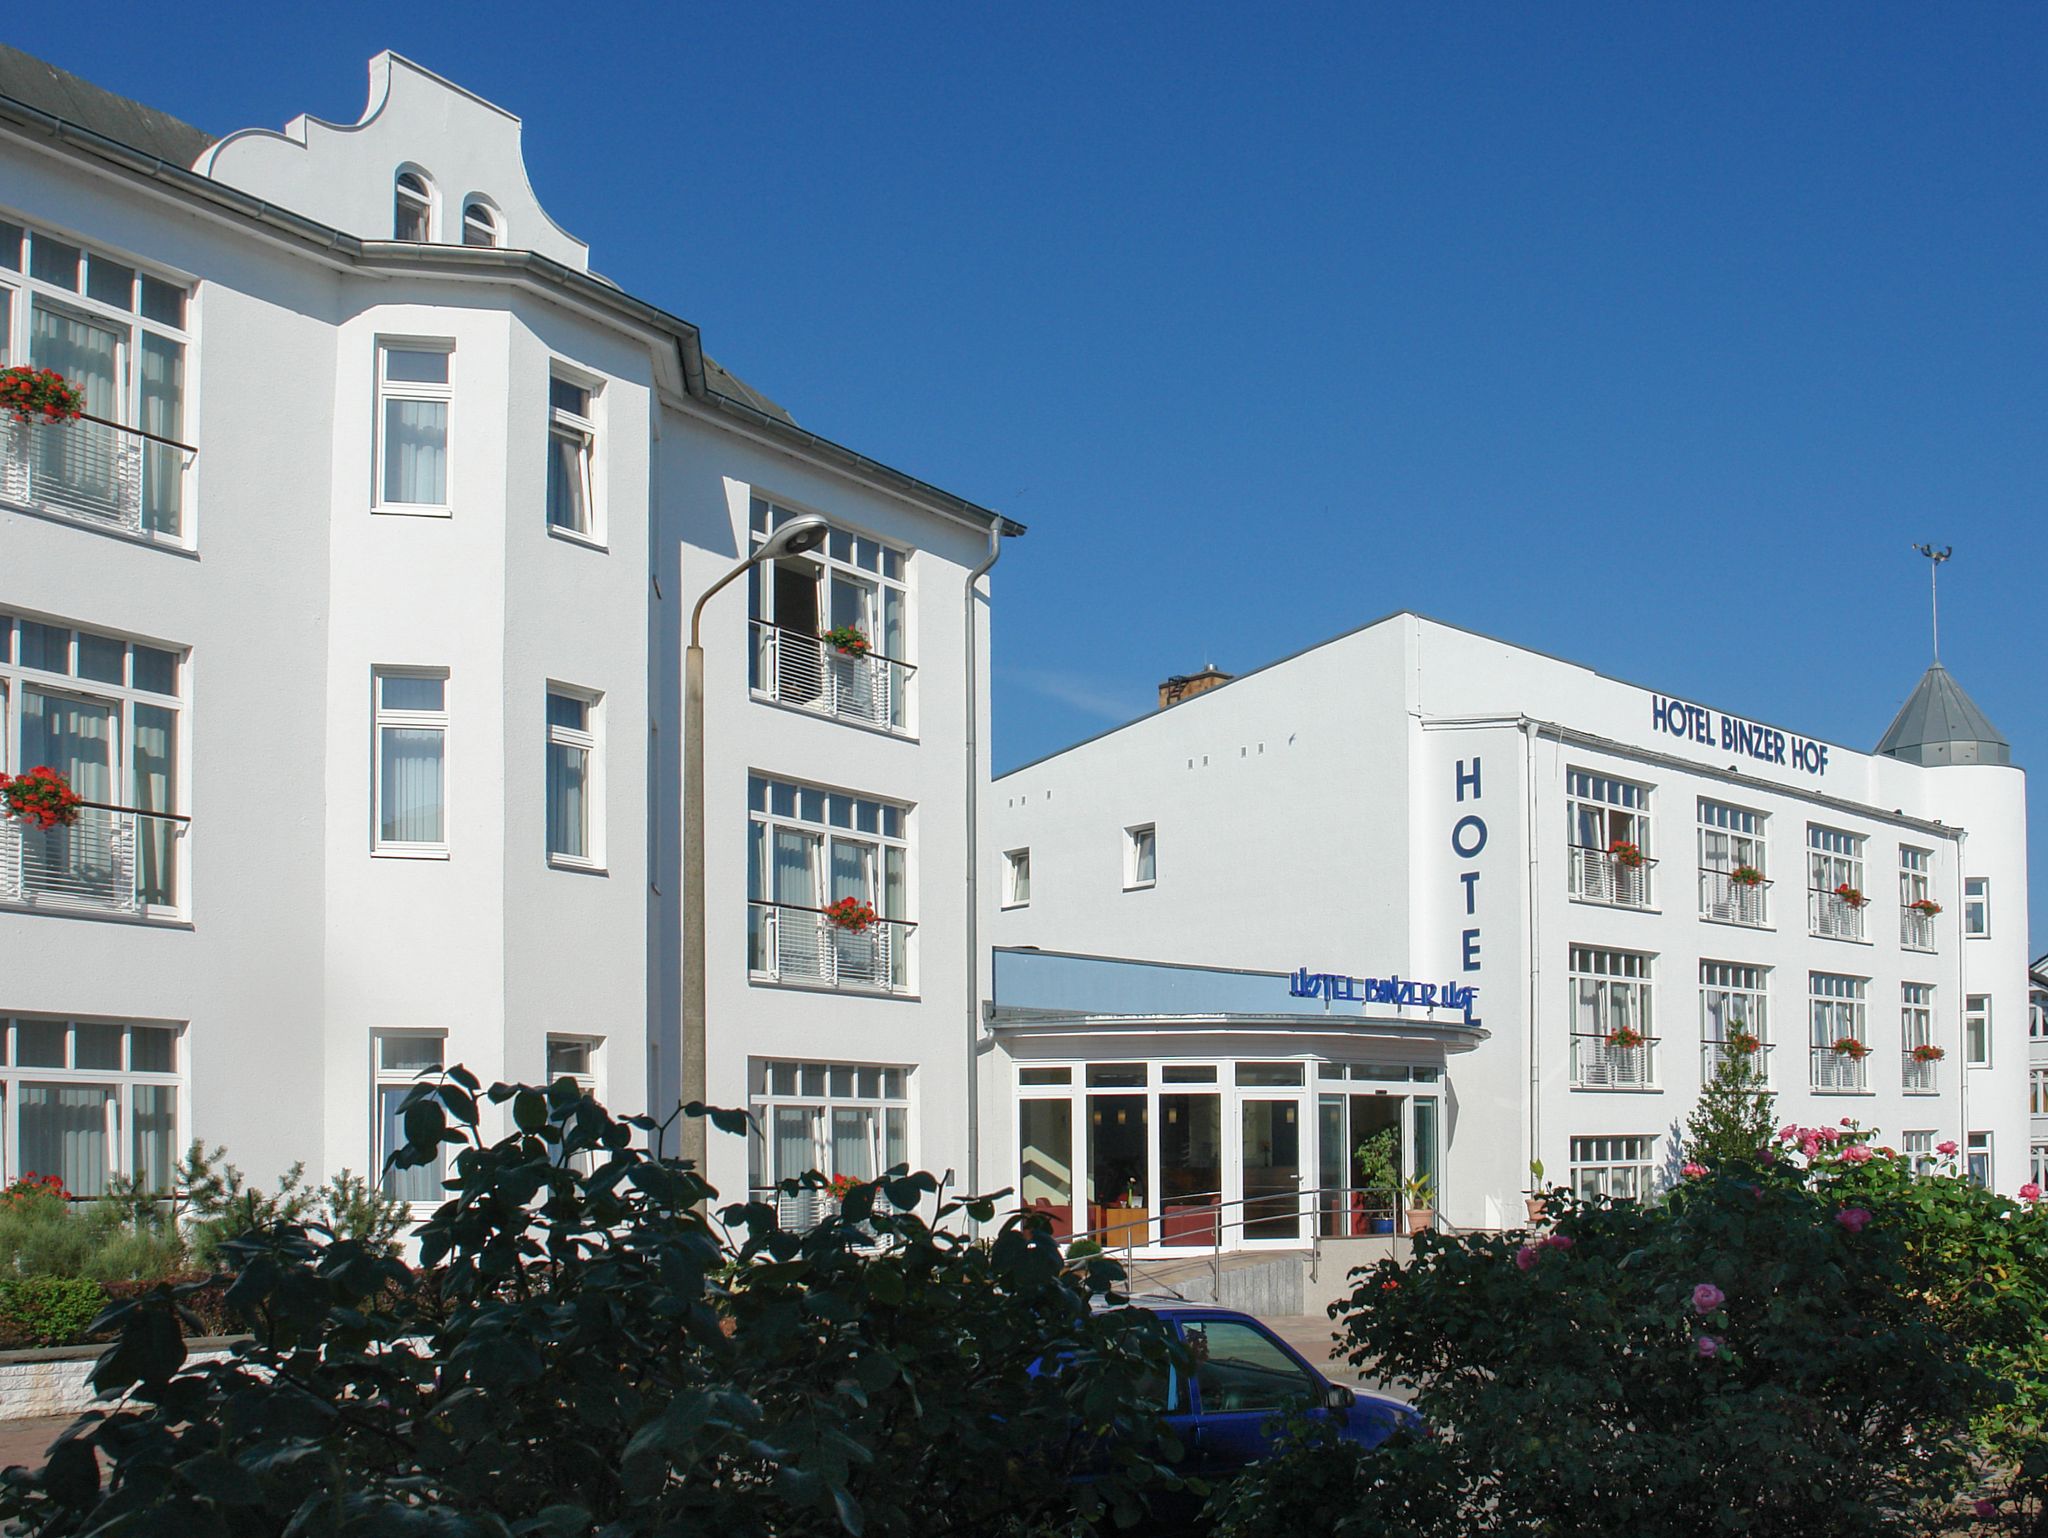 Atrium Hotel Krüger